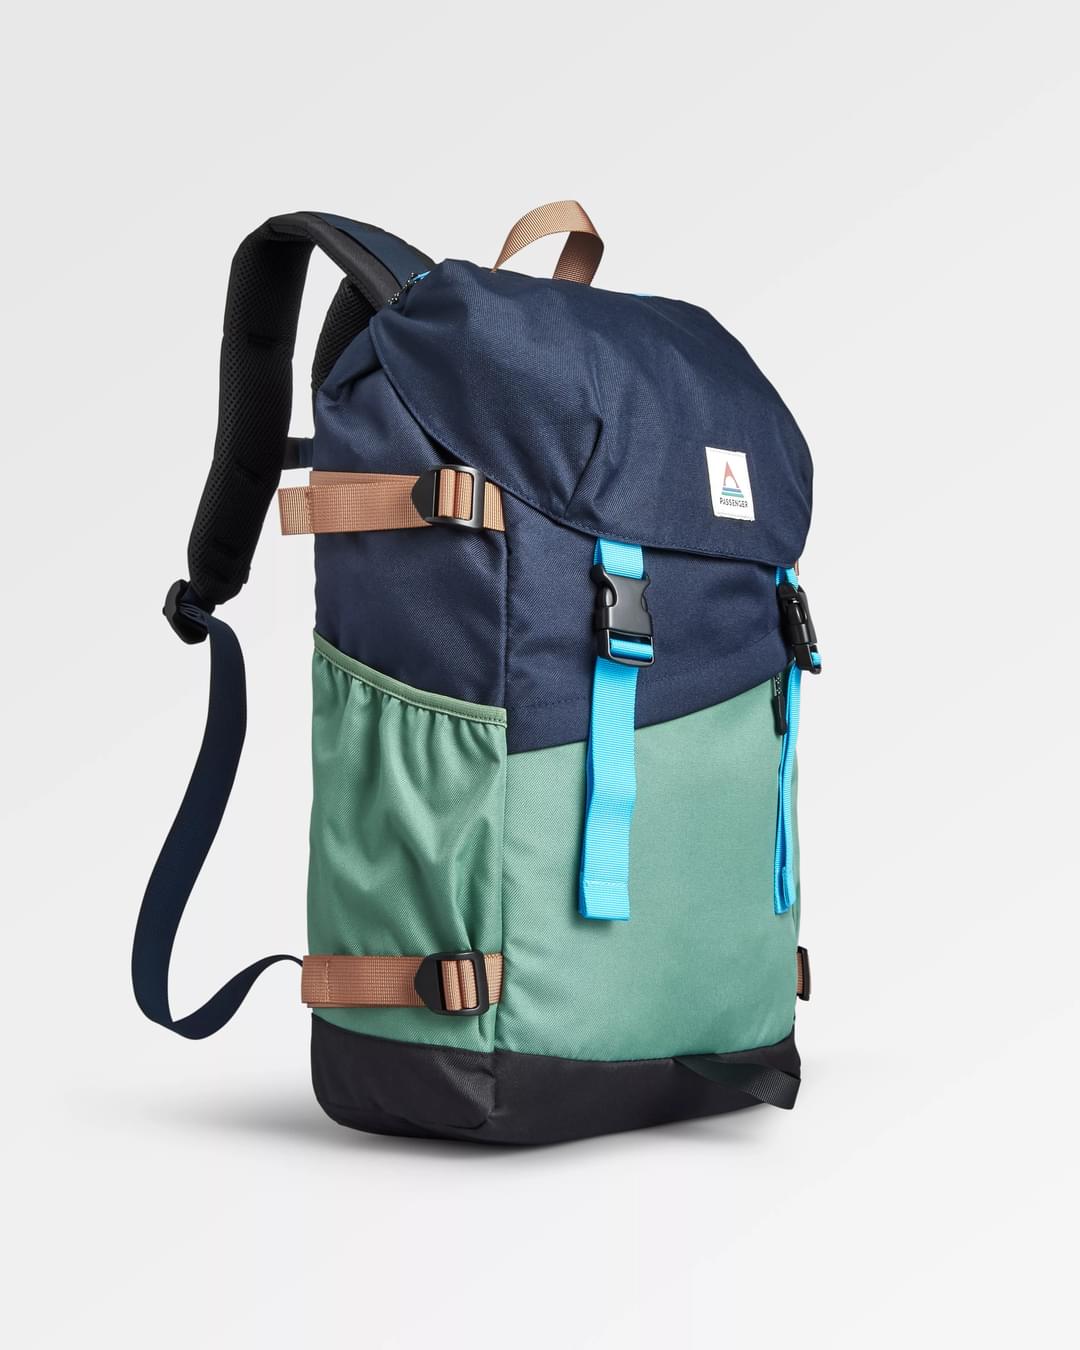 Boondocker Recycled 26L Backpack - Deep Navy/Laurel Green